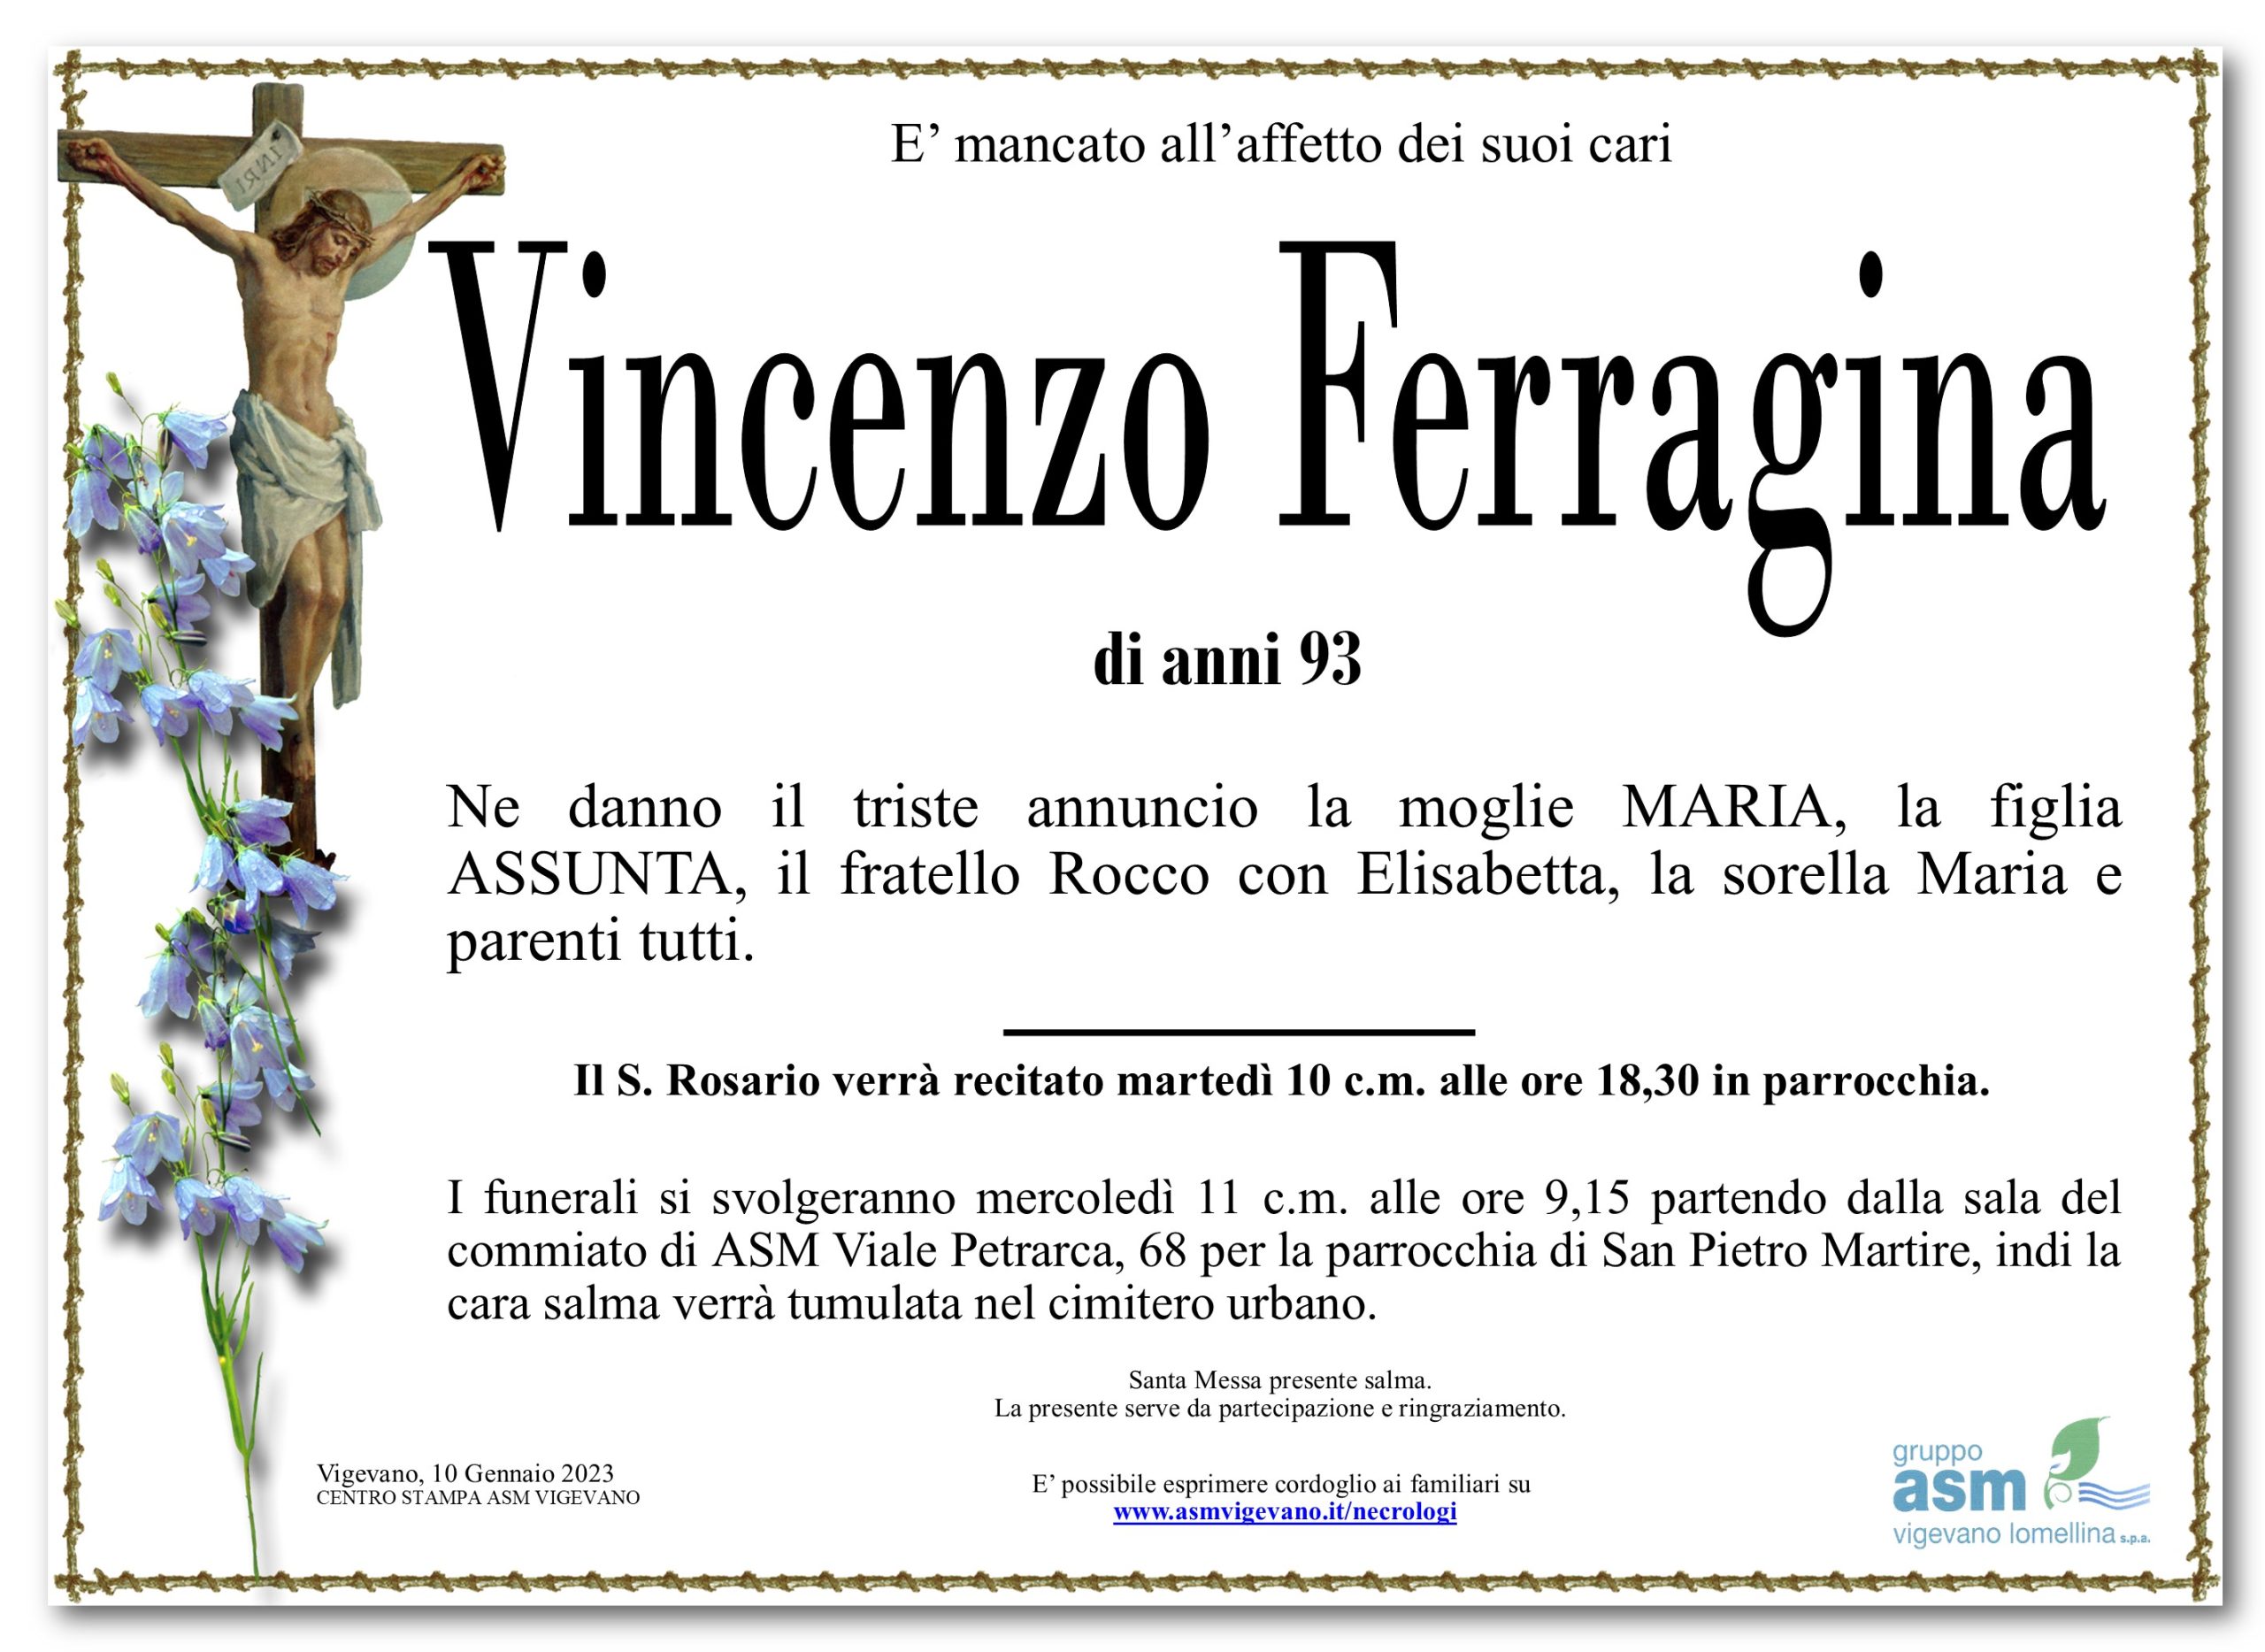 Vincenzo Ferragina